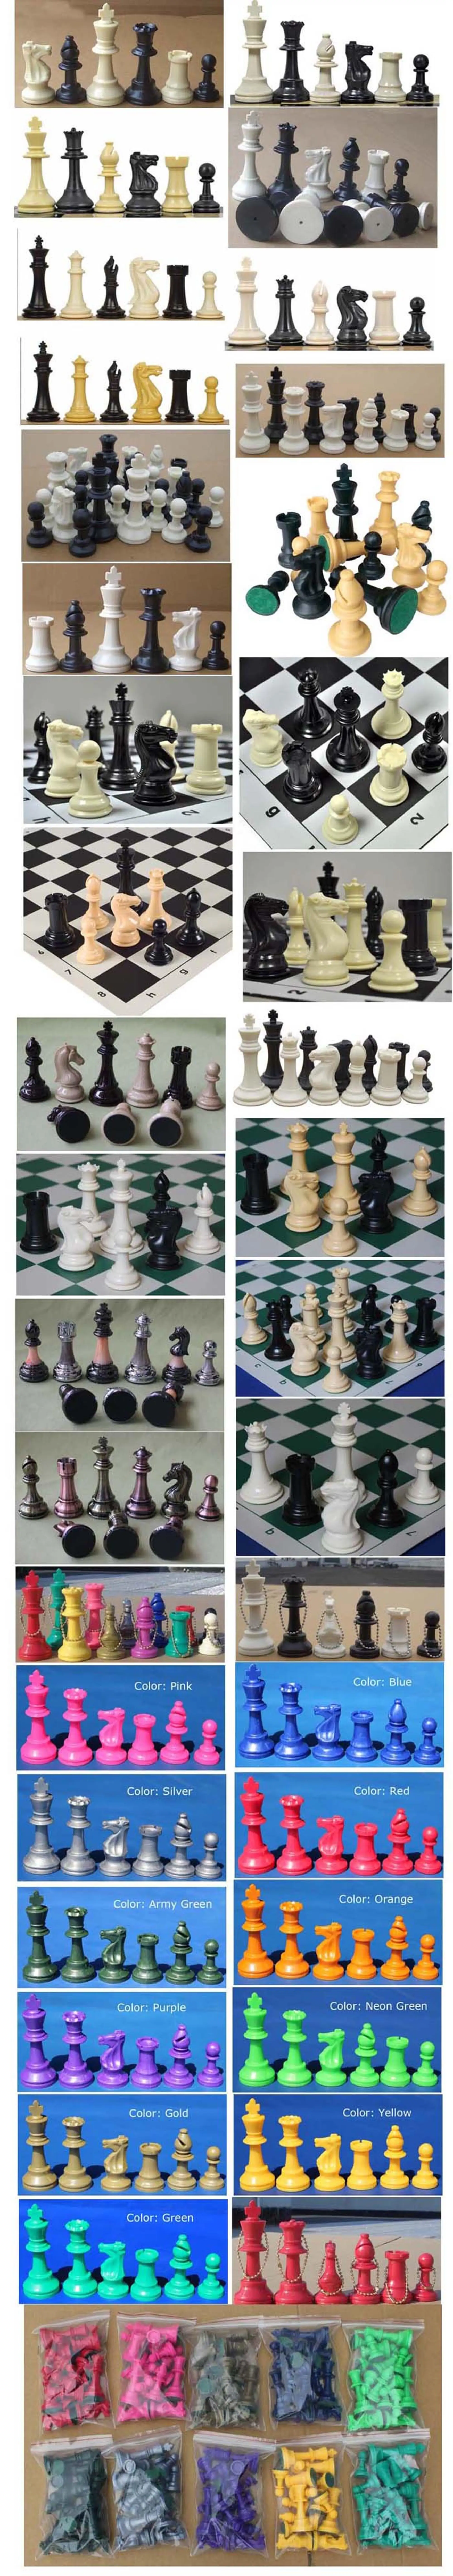 chesspieces2